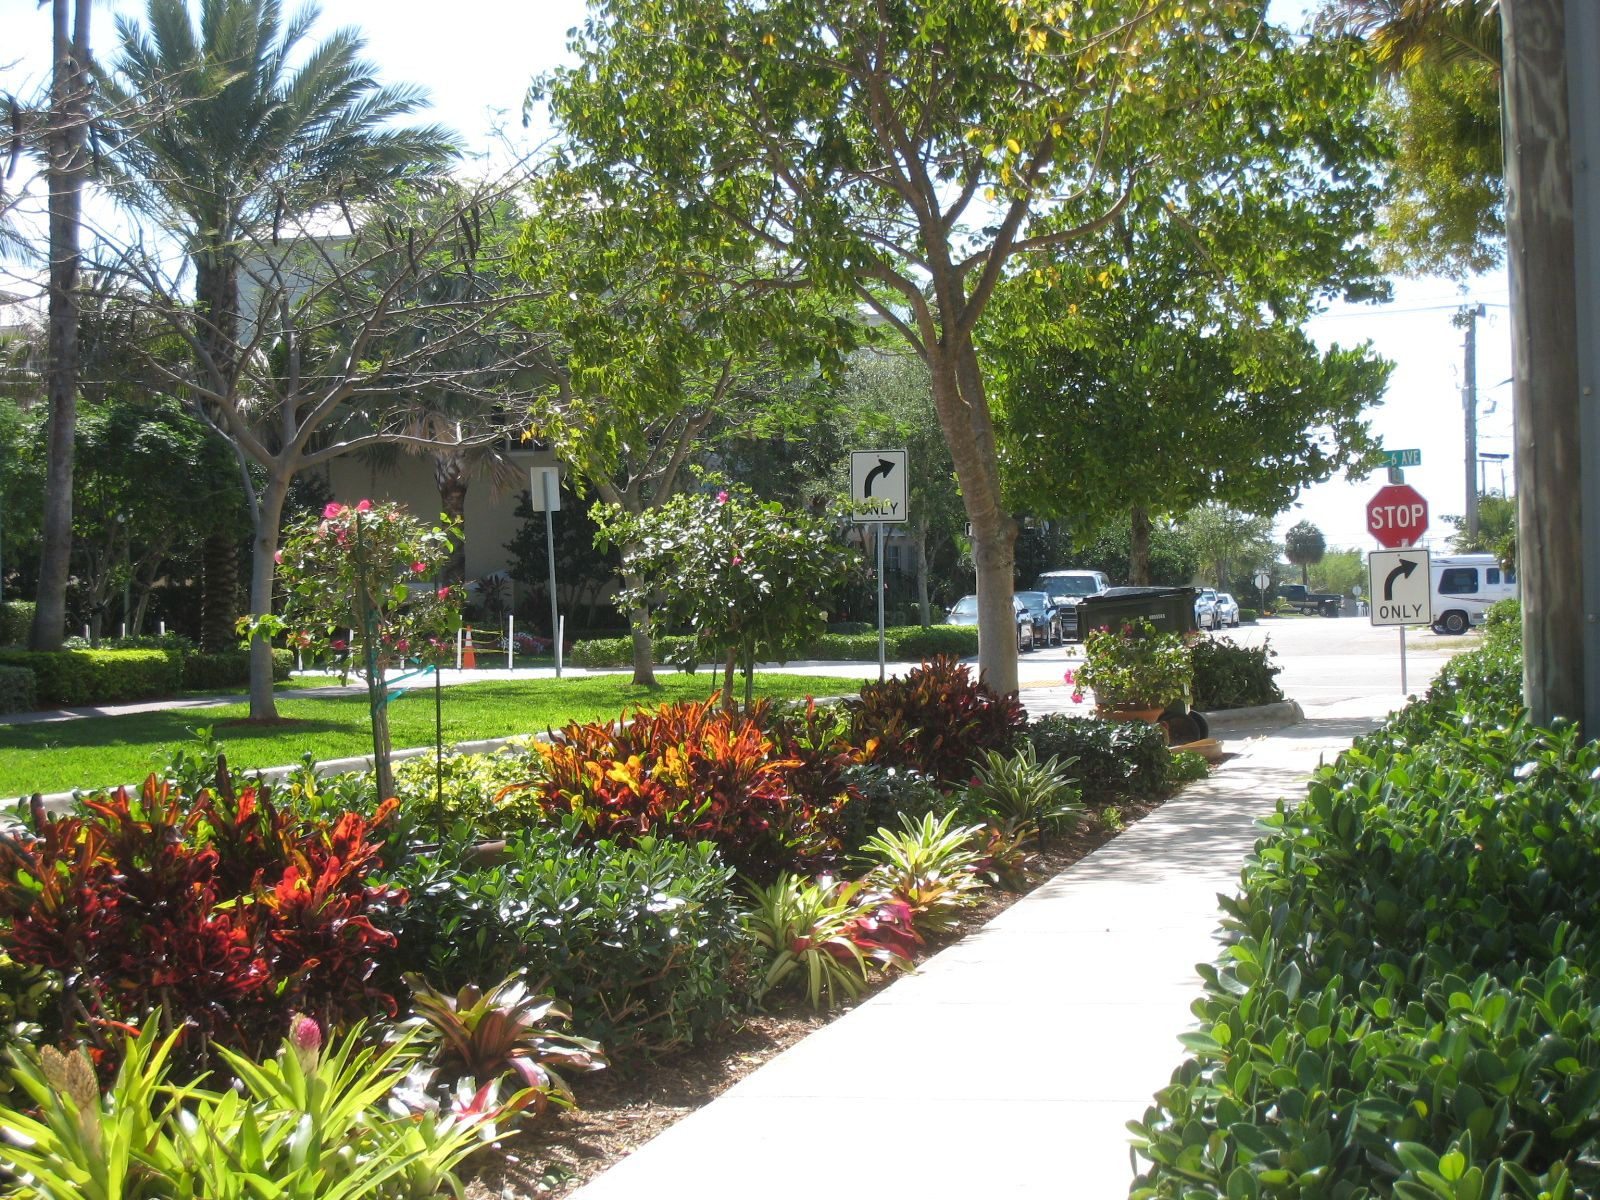 Florida Landscape Design Pictures
 south florida landscaping ideas pictures